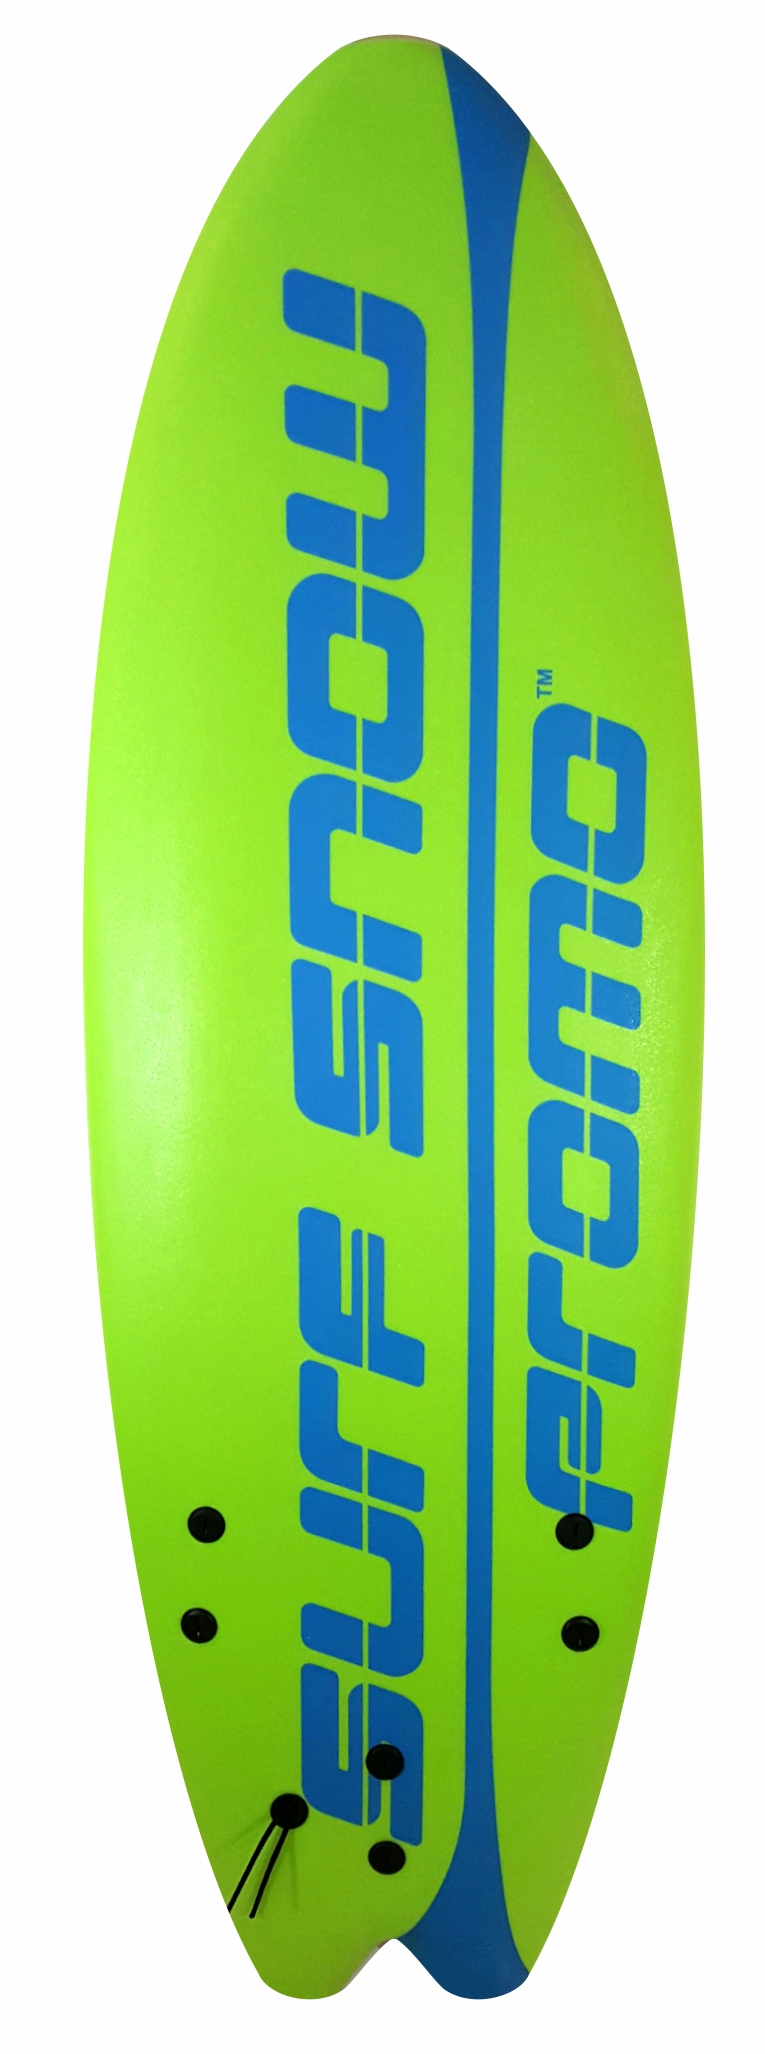 68 Inch Surfboard - Softtop.jpg